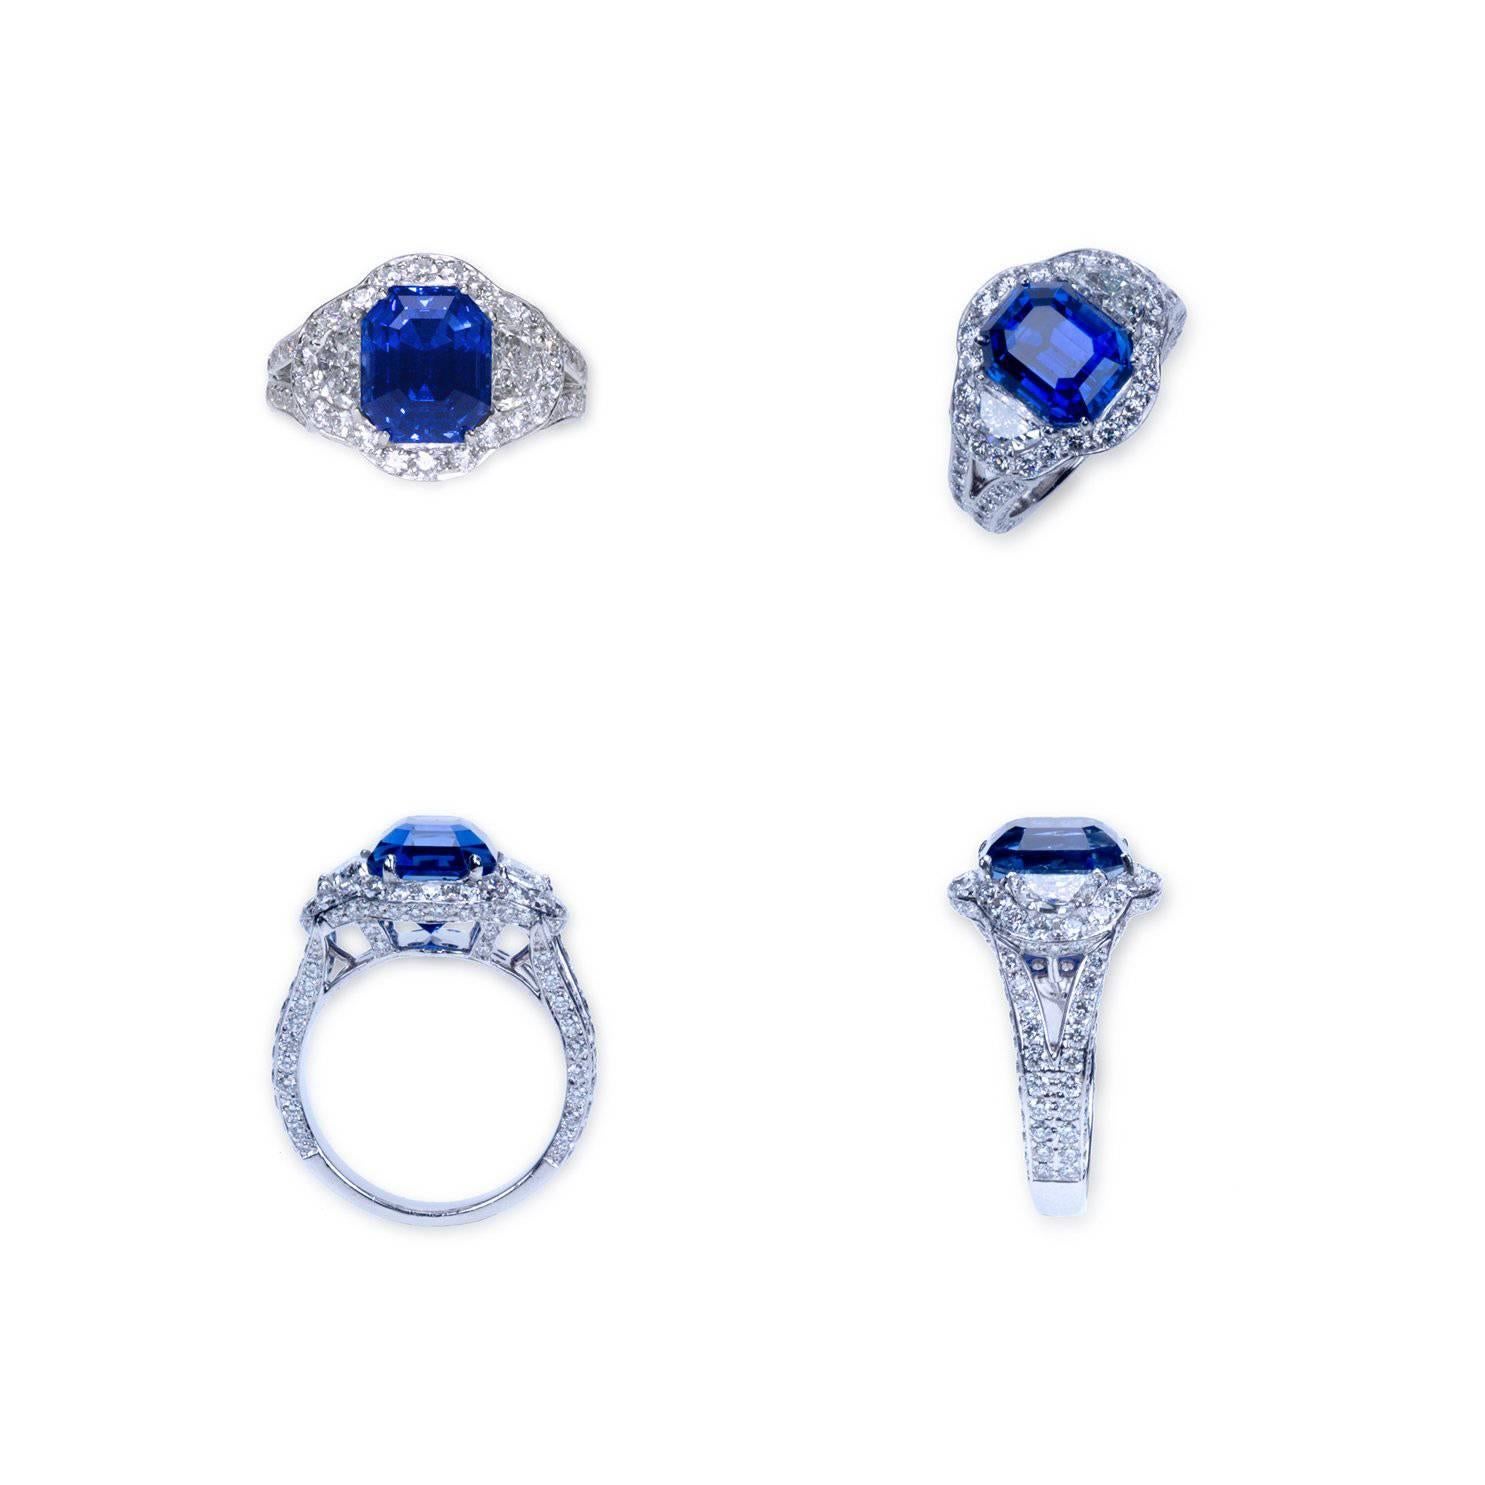 A "Samuel Getz" Platinum Sapphire and Diamond Ring Featuring an Exceptional Natural Unheated Emerald Cut Blue Sapphire, 5.97 Carats ([10.19 x 8.40 x 7.35 mm.]. [Sri Lanka] [AGL Report and TGL Report], a Pair Half Moon Shape Diamonds, 0.86